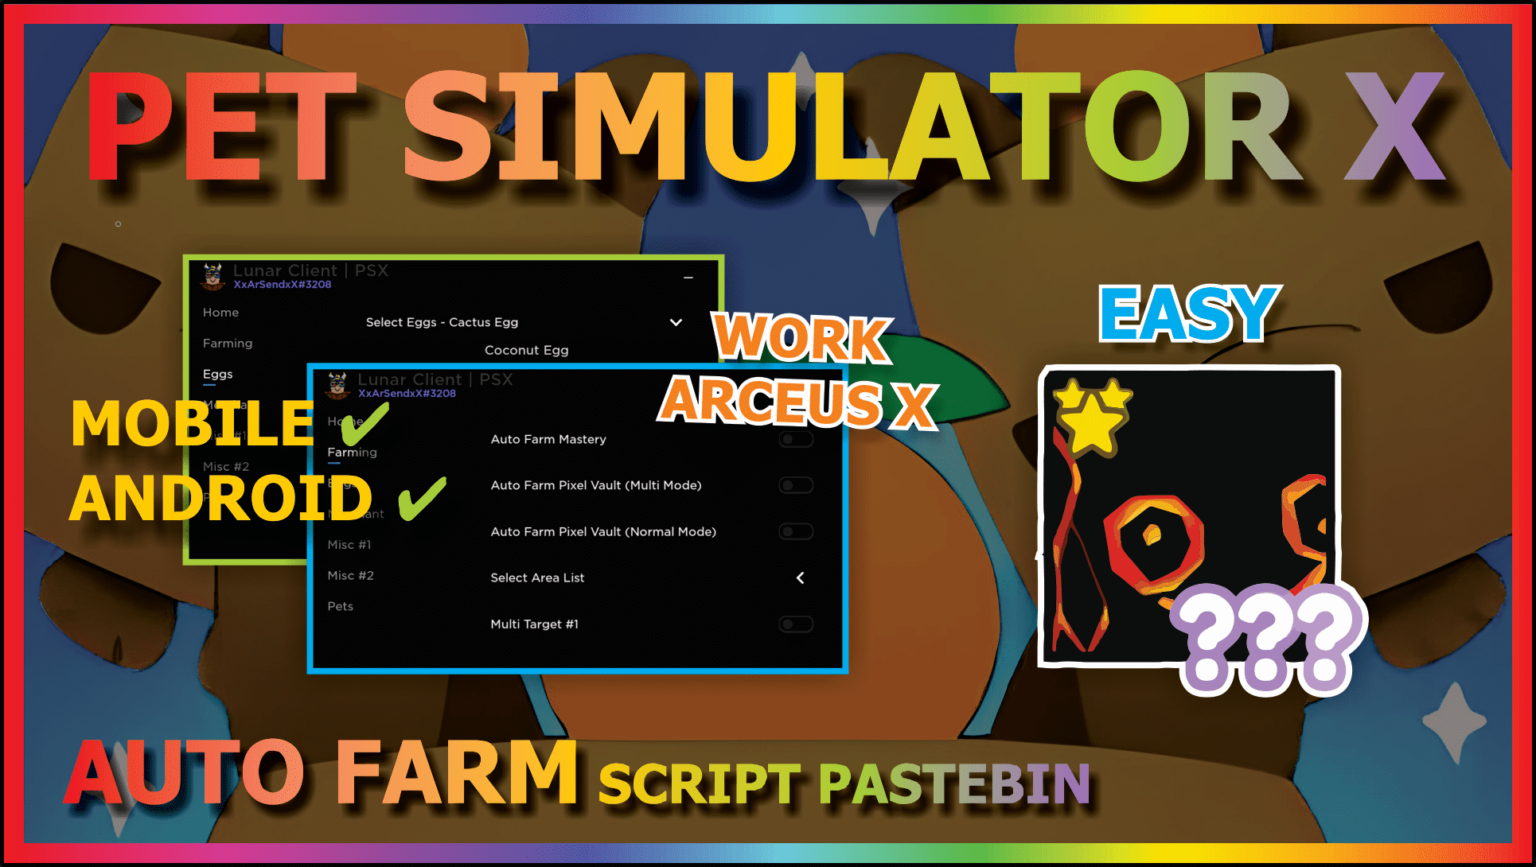 Anime Fighters Simulator Script Pastebin – ScriptPastebin